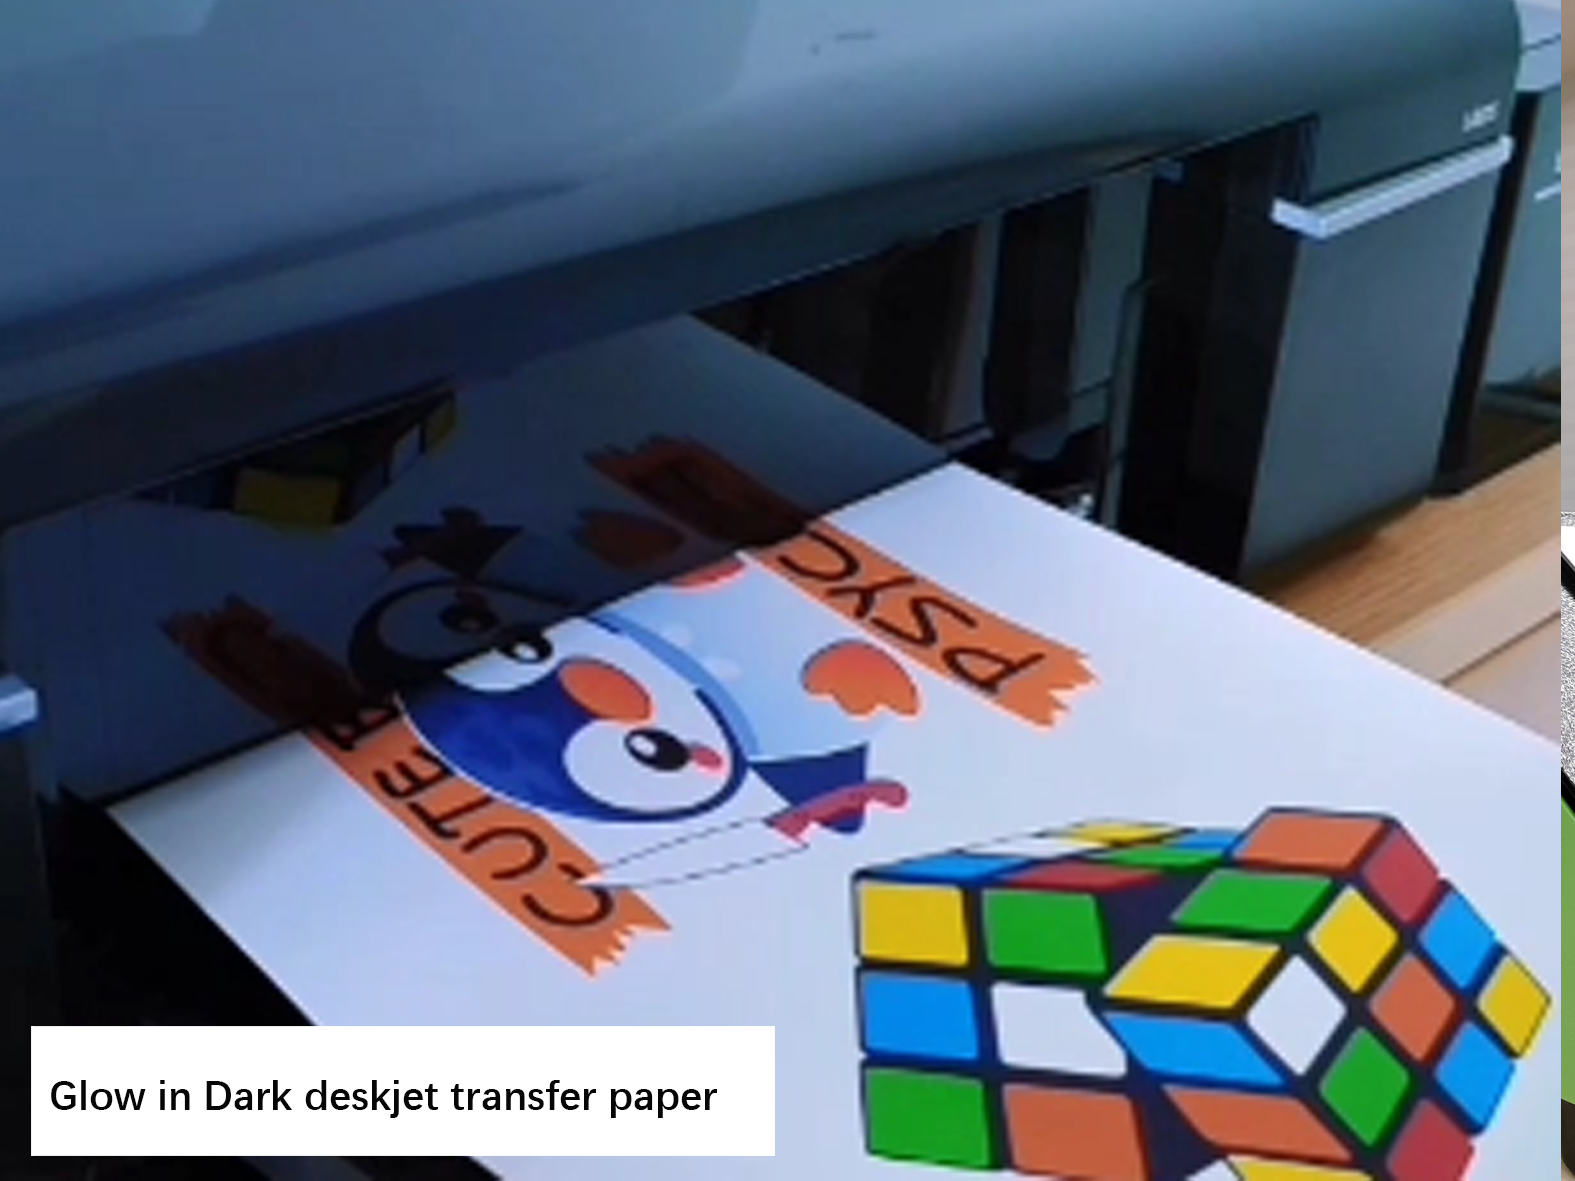 Glow in Dark Deskjet transfer paper HTGD-300 for T-shirts imaging